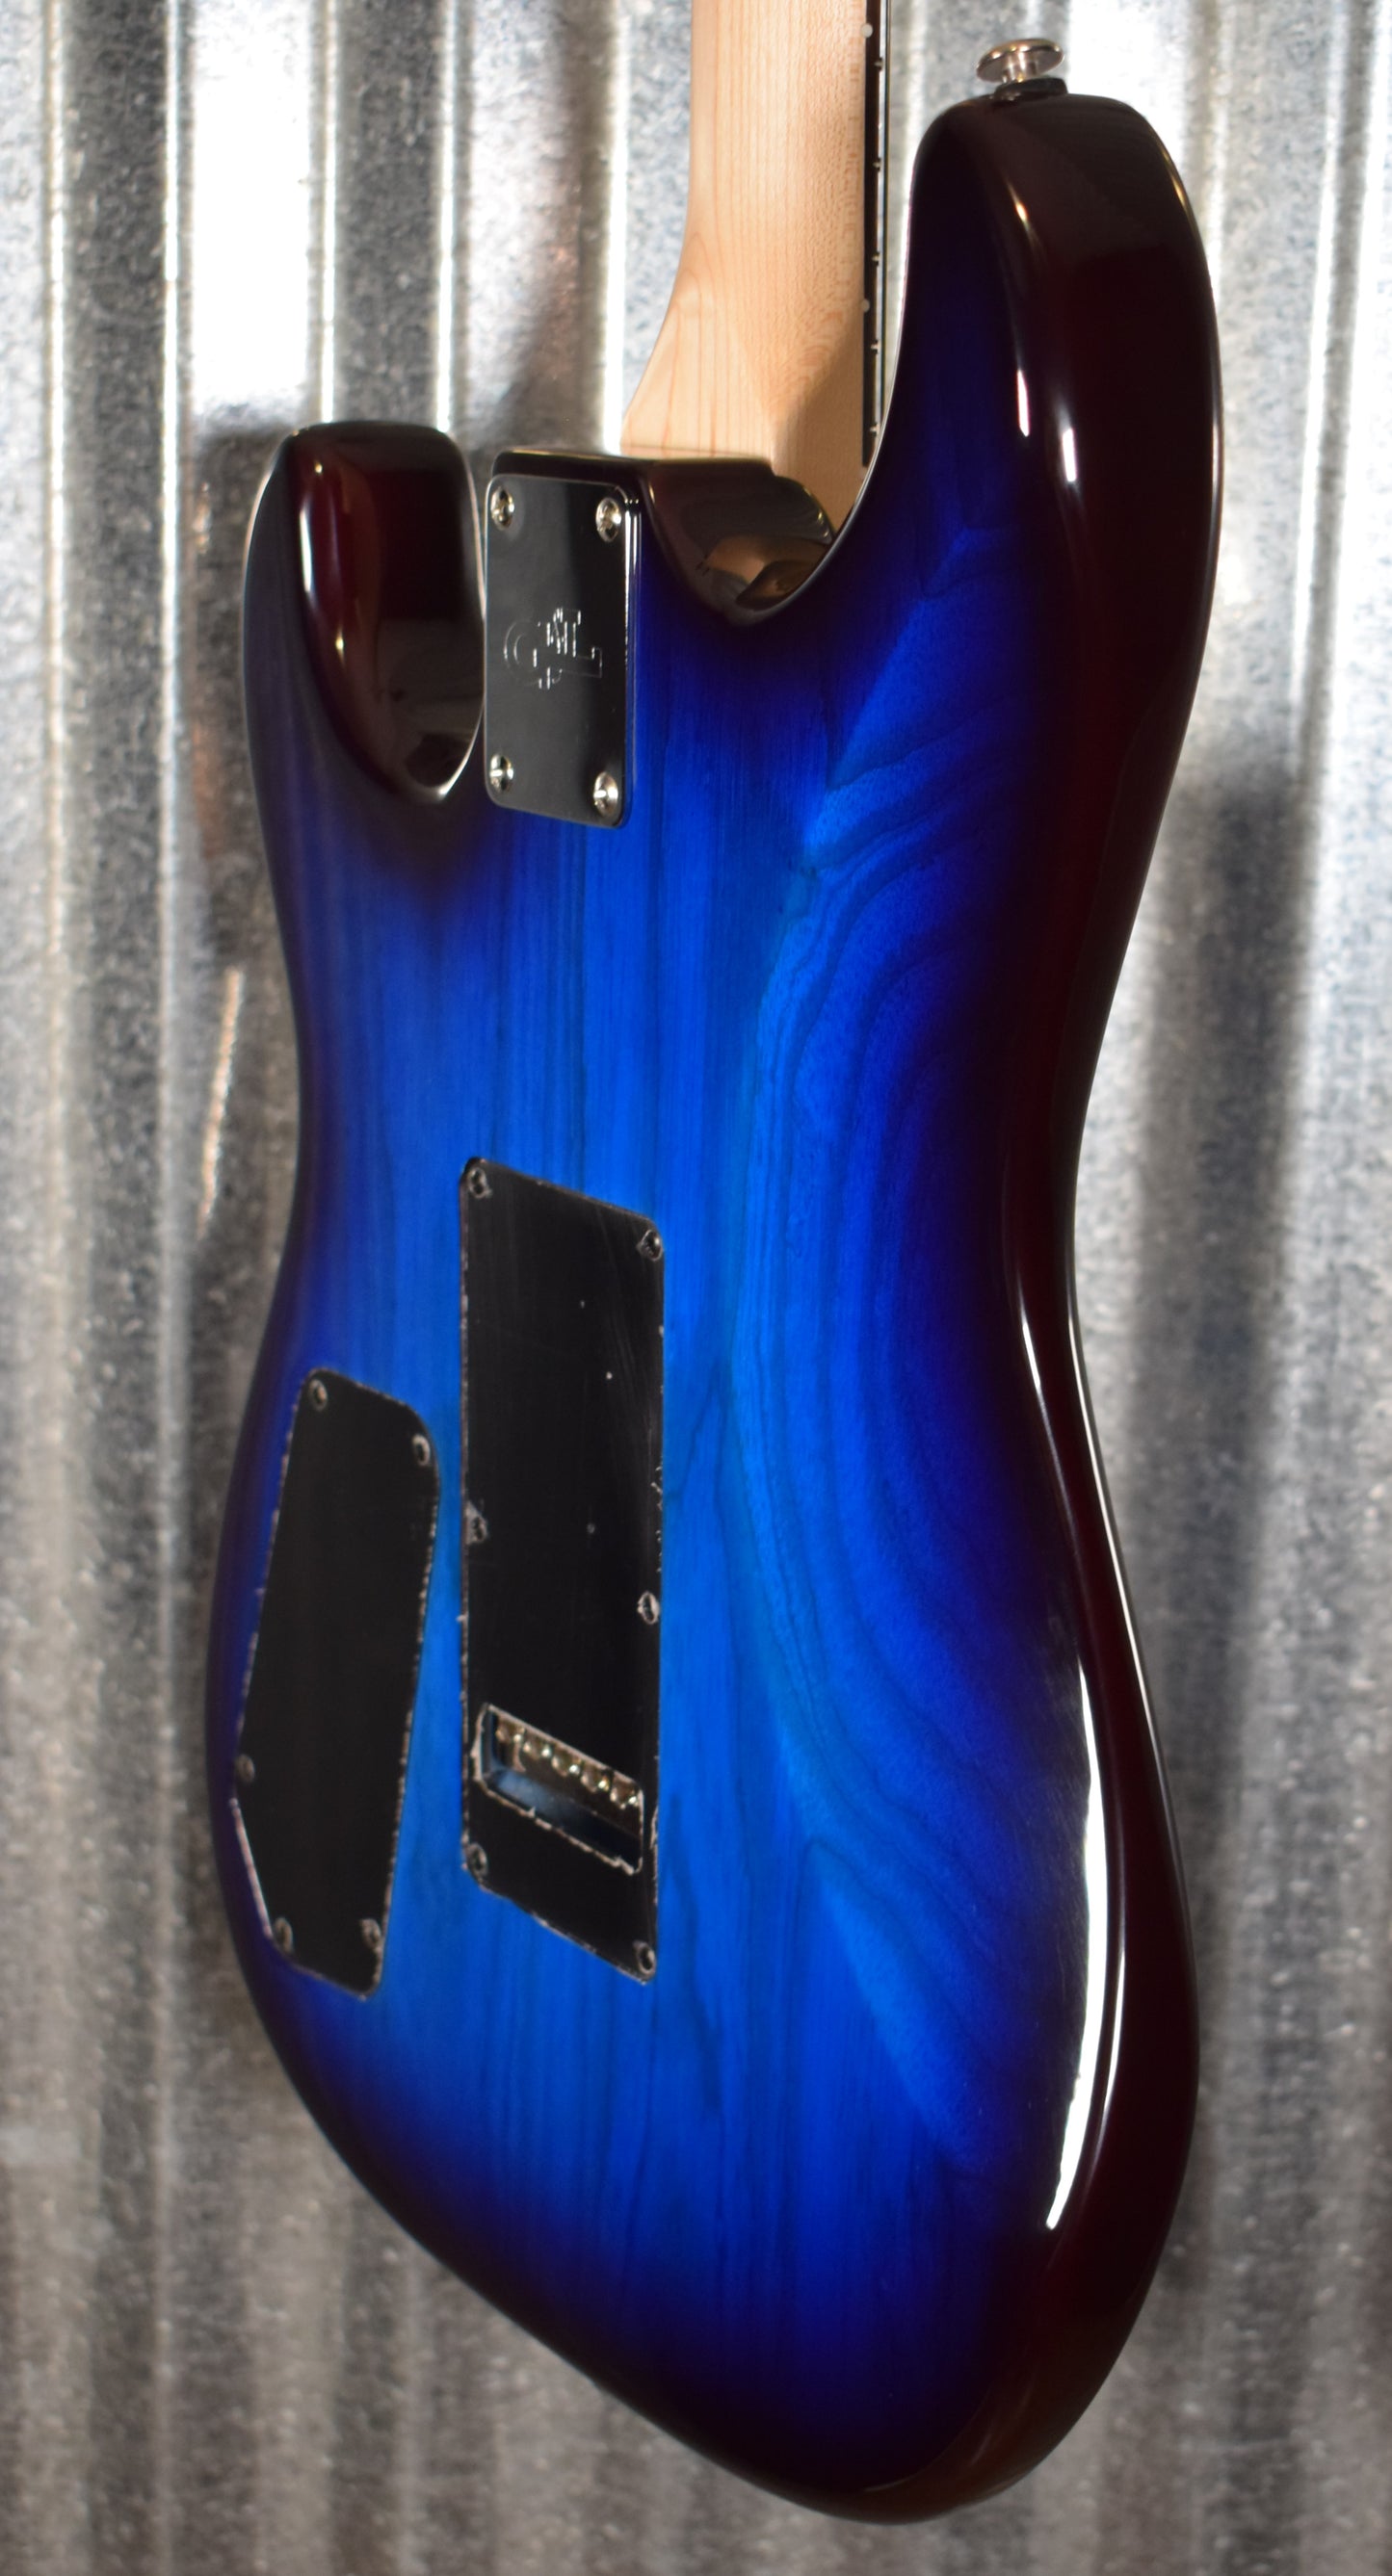 G&L USA Legacy HH RMC Blueburst Rosewood Satin Neck Guitar & Case #5362